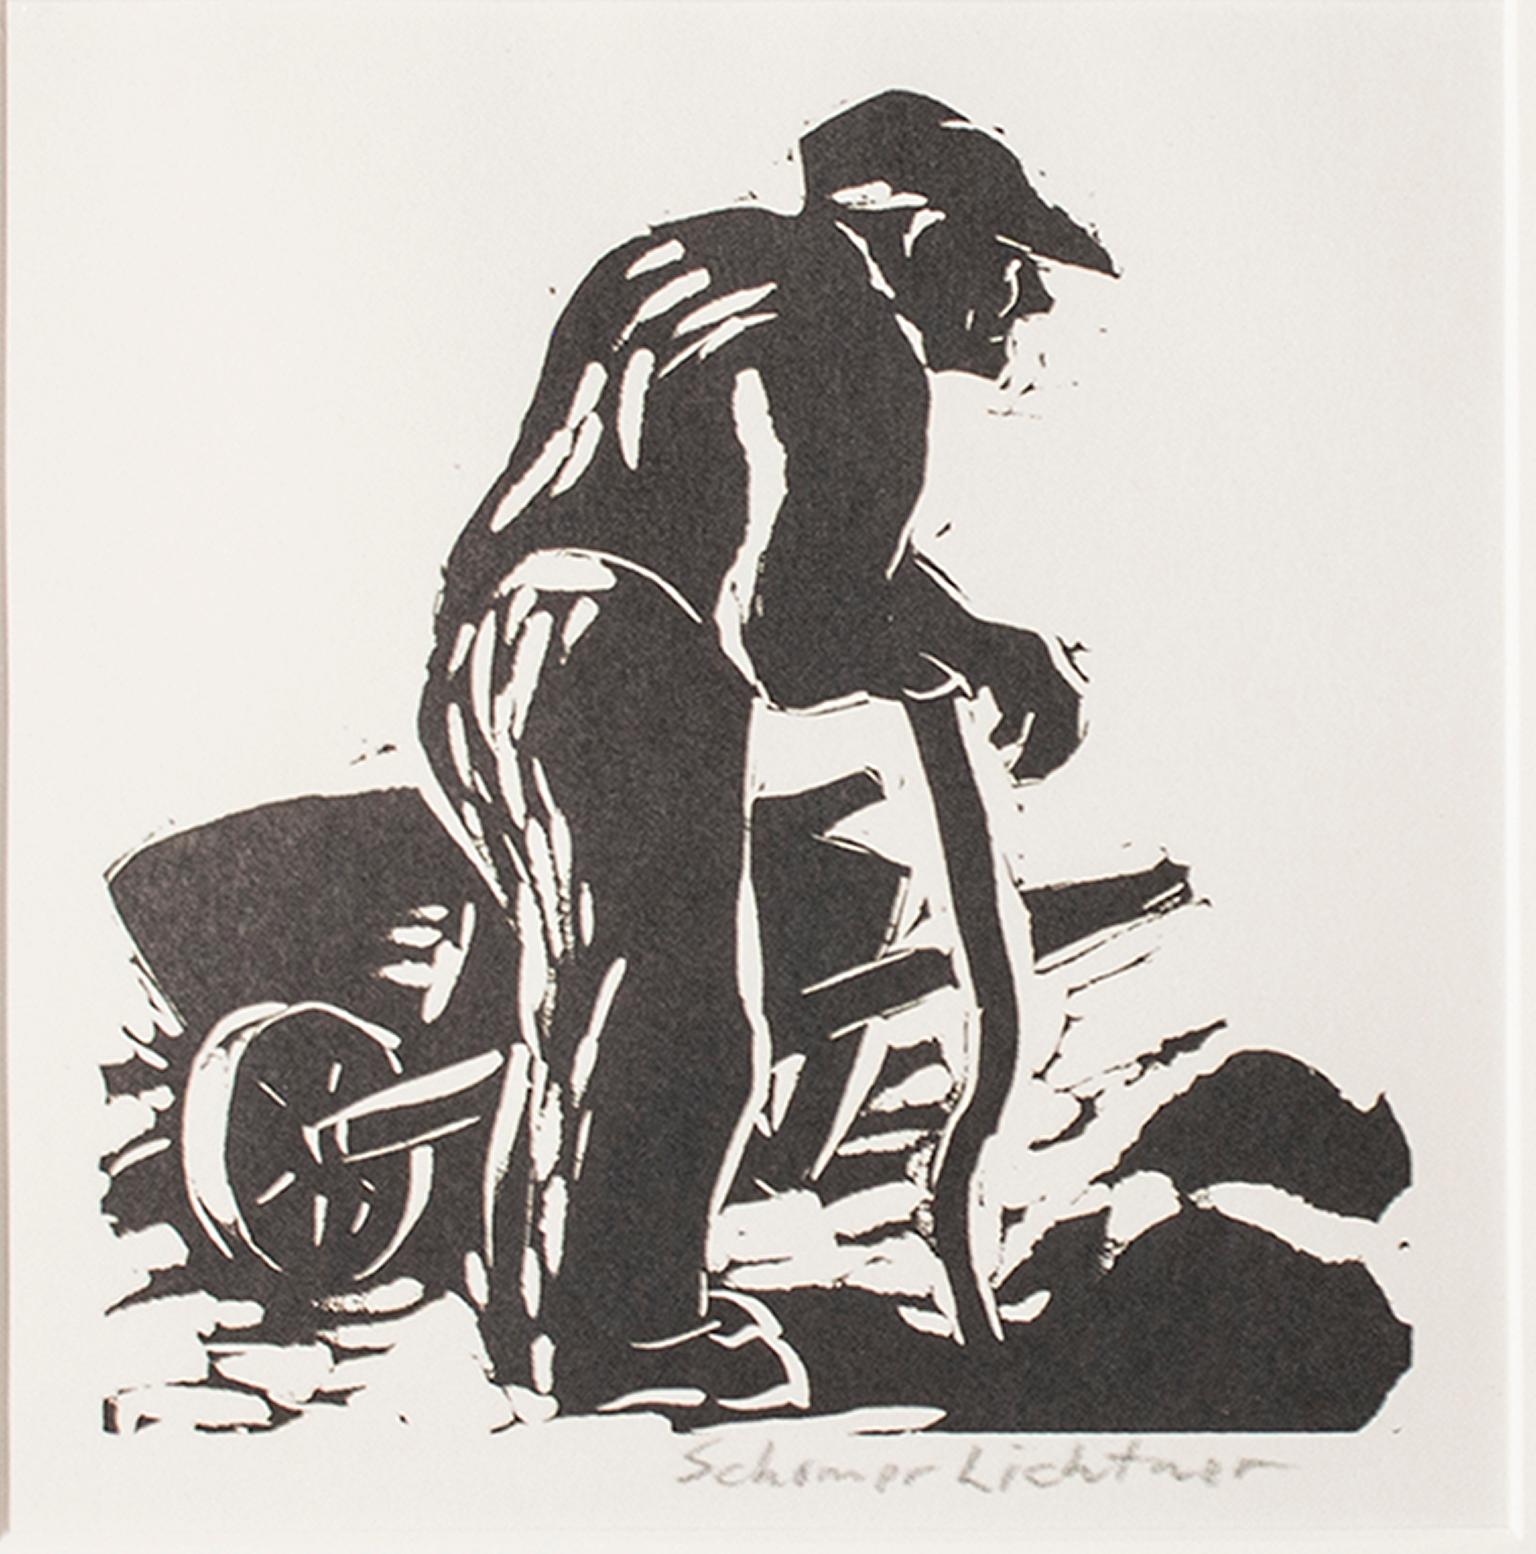 "Rest, " Farmer leaning on Work Tool Linoleum Cut signed by Schomer Lichtner